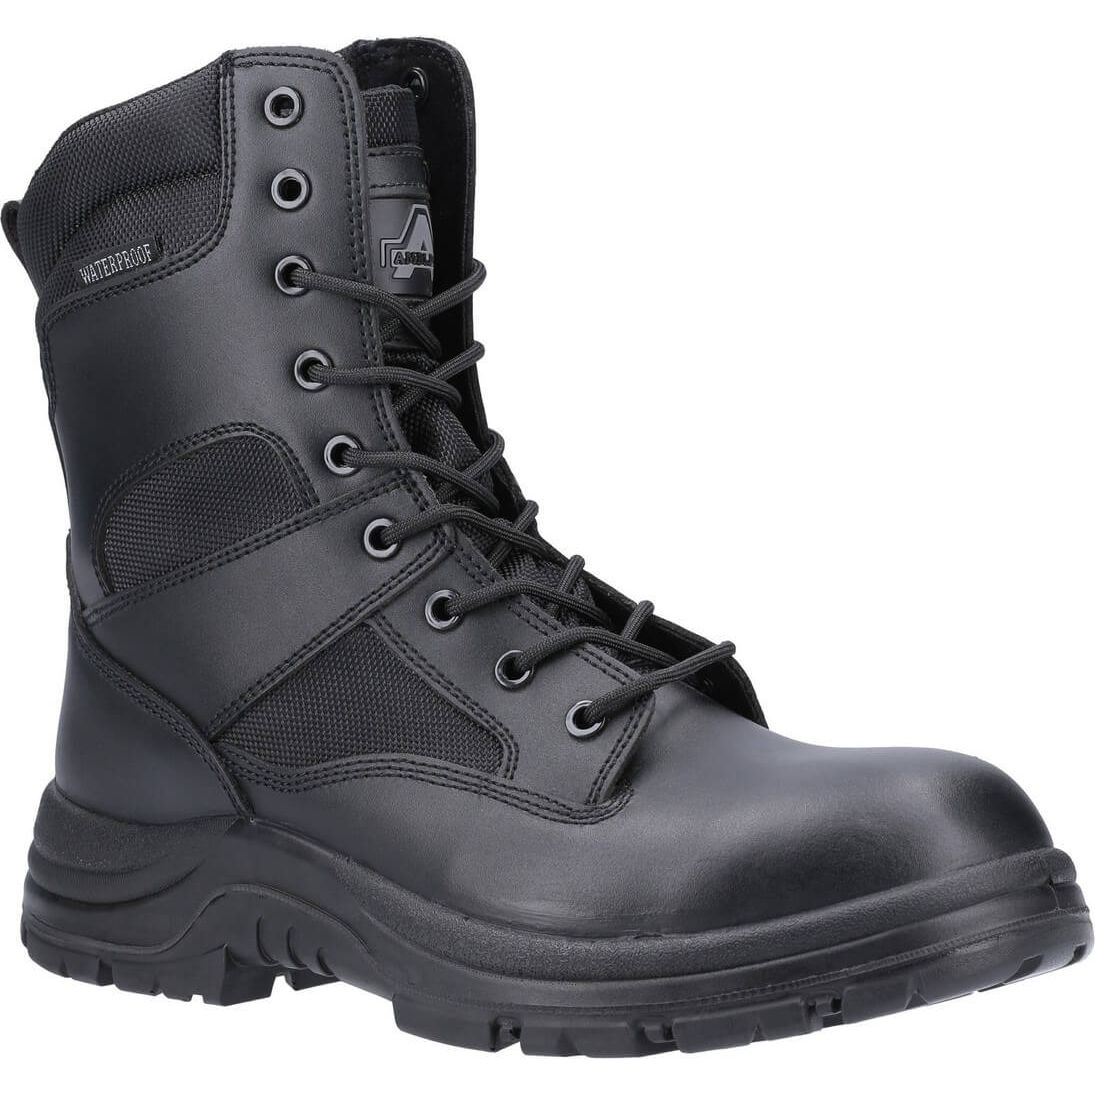 Amblers Combat High-Leg Waterproof Metal-Free Boots Mens - workweargurus.com